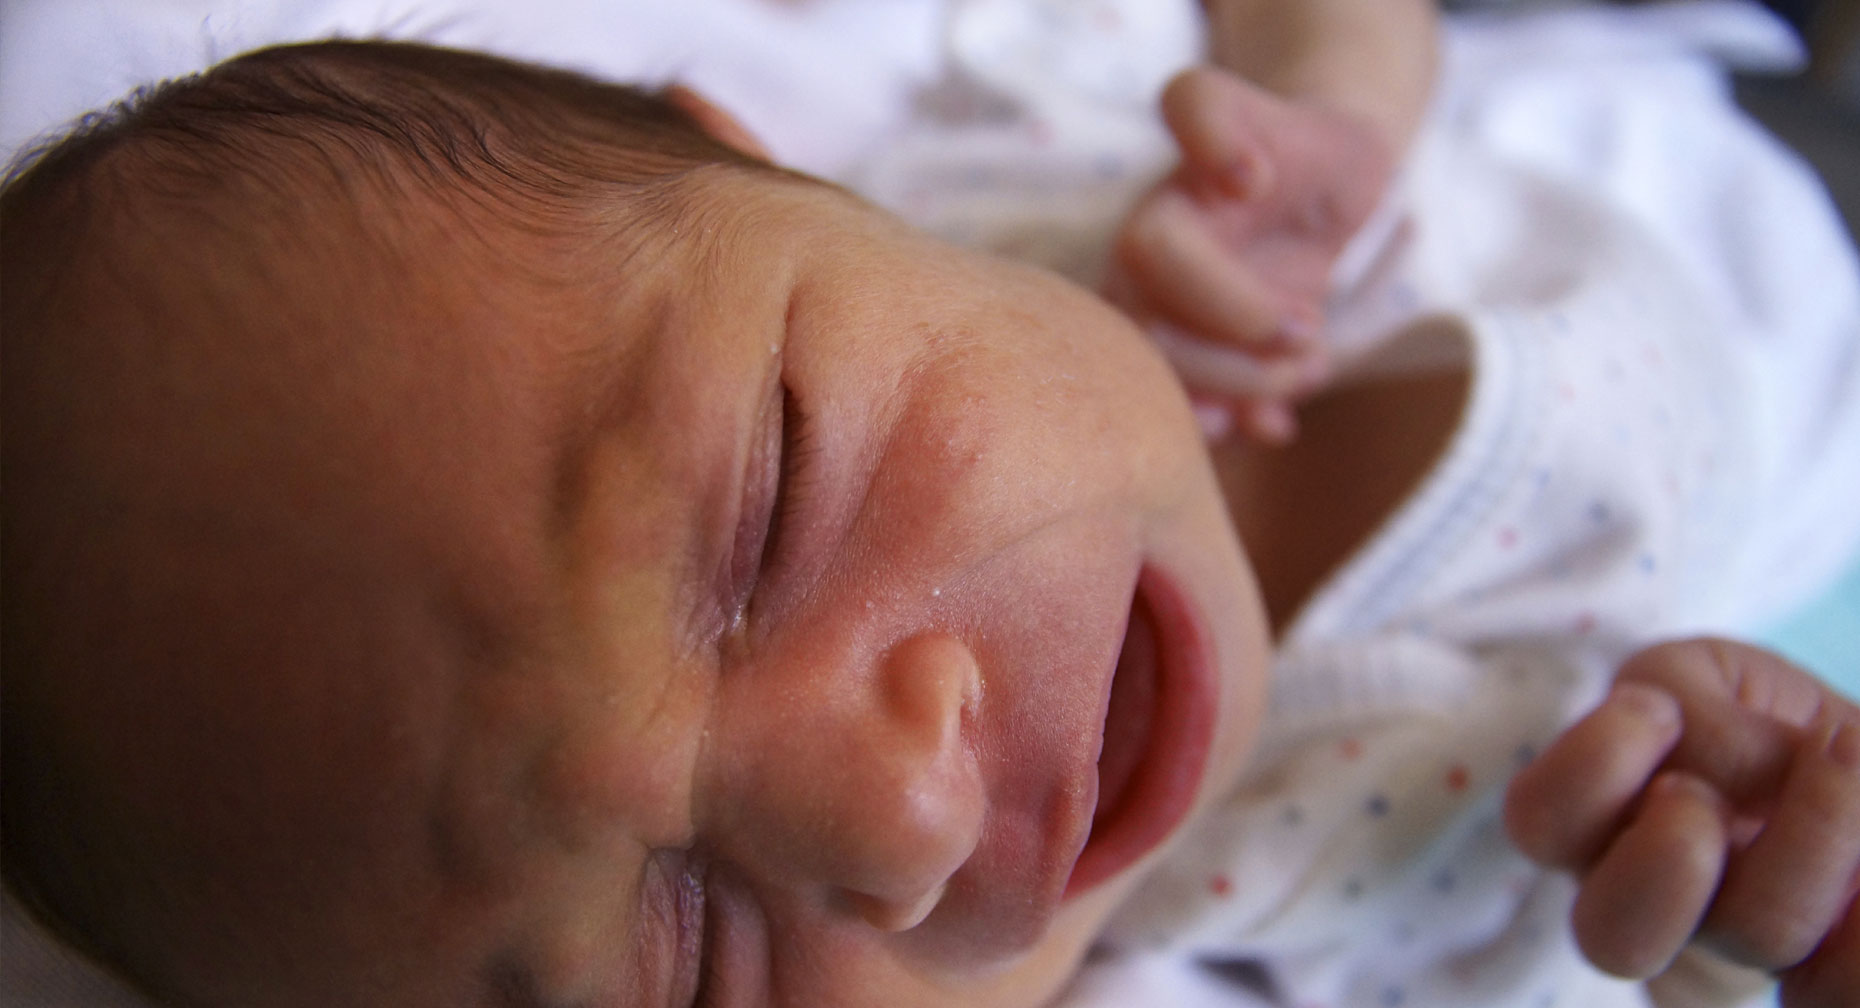 Breastfeeding: my baby's feeding patterns have changed